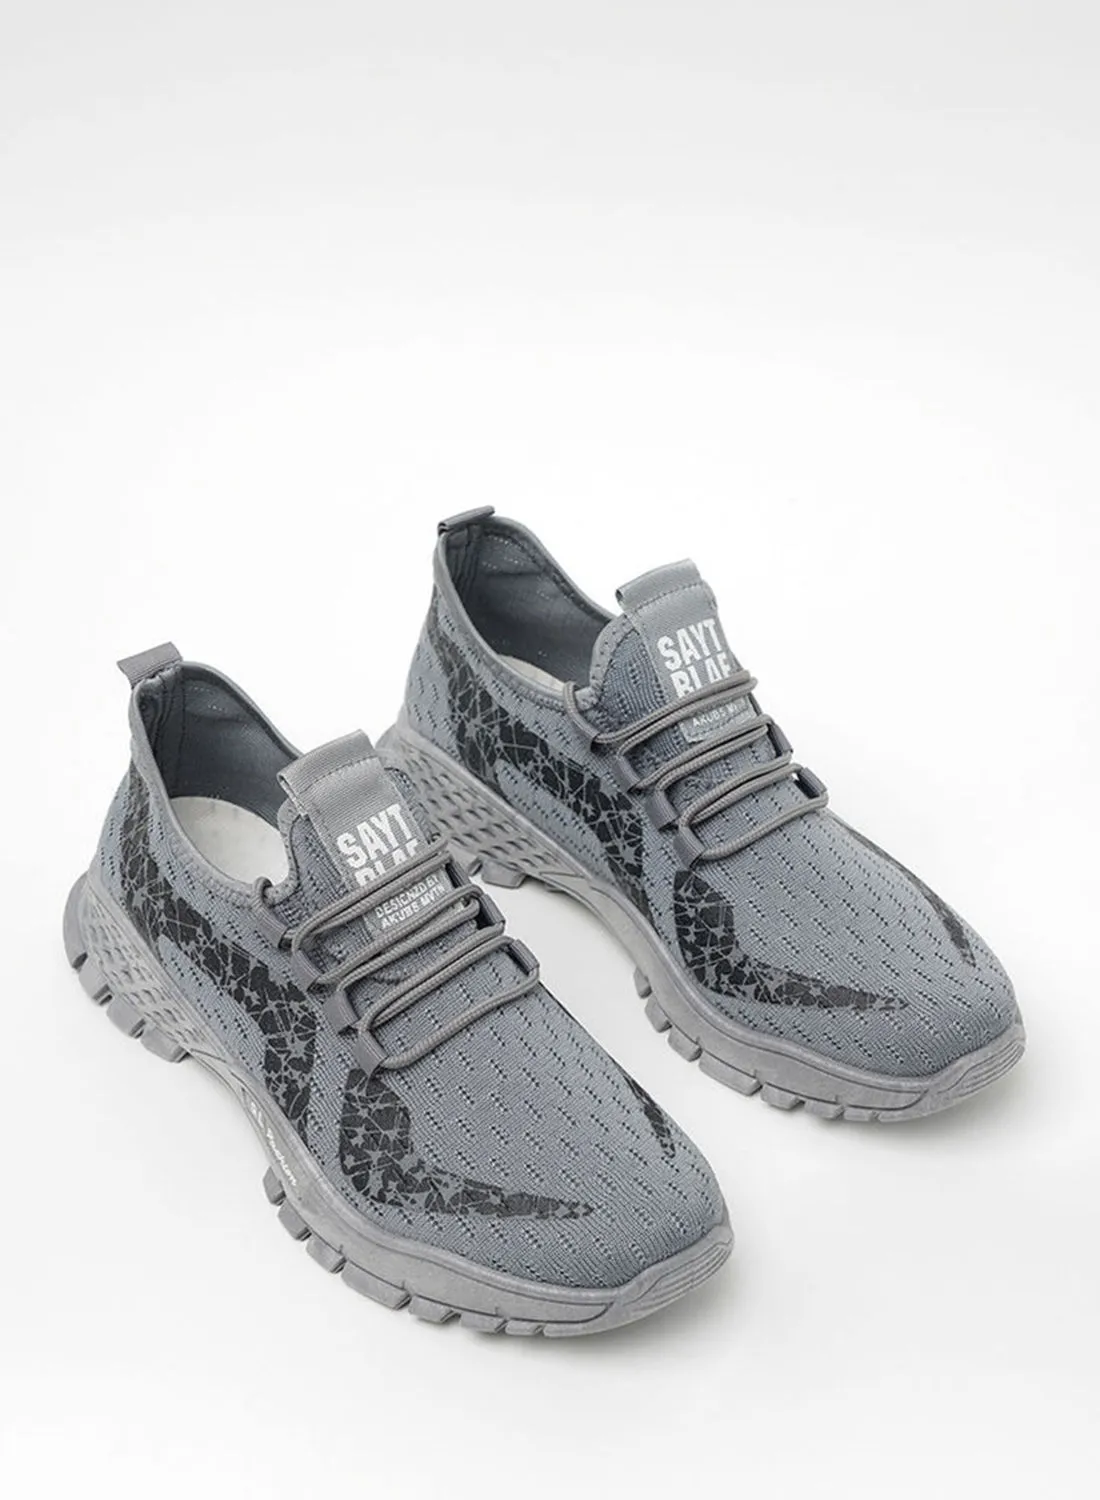 Cobblerz Men's Lace-Up Low Top Sneakers Grey